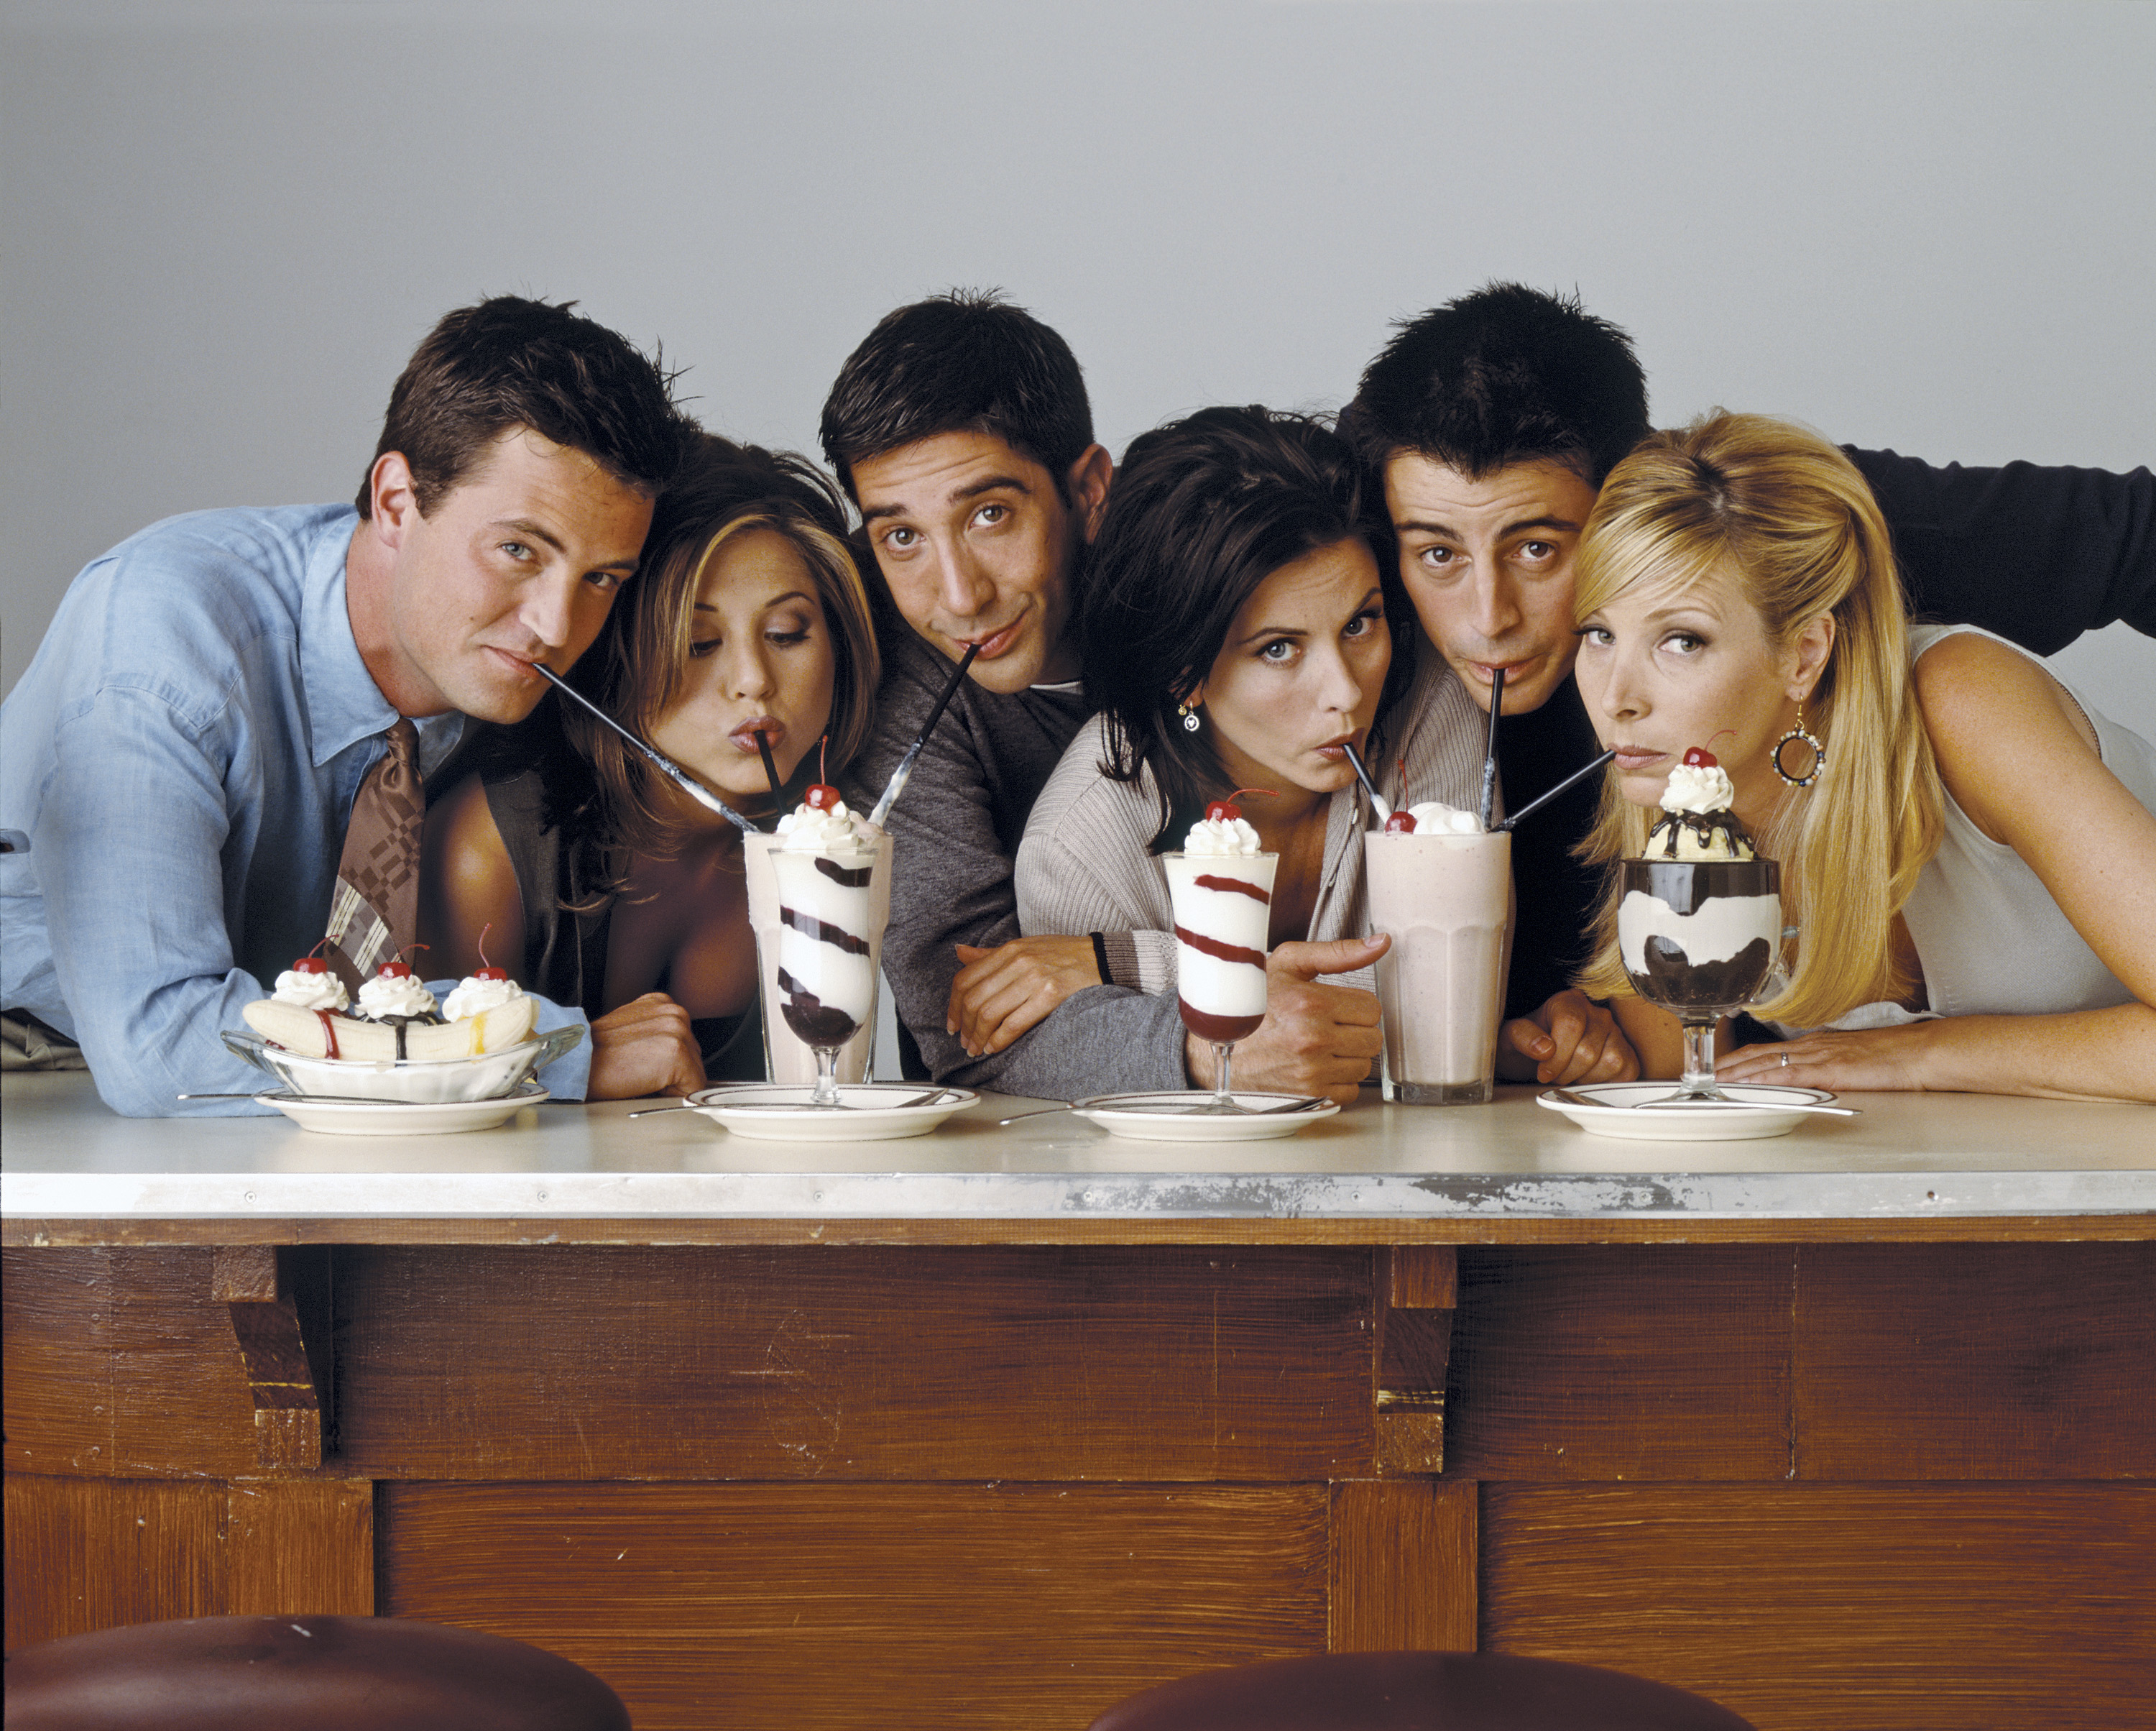 The Friends cast eating milkshakes